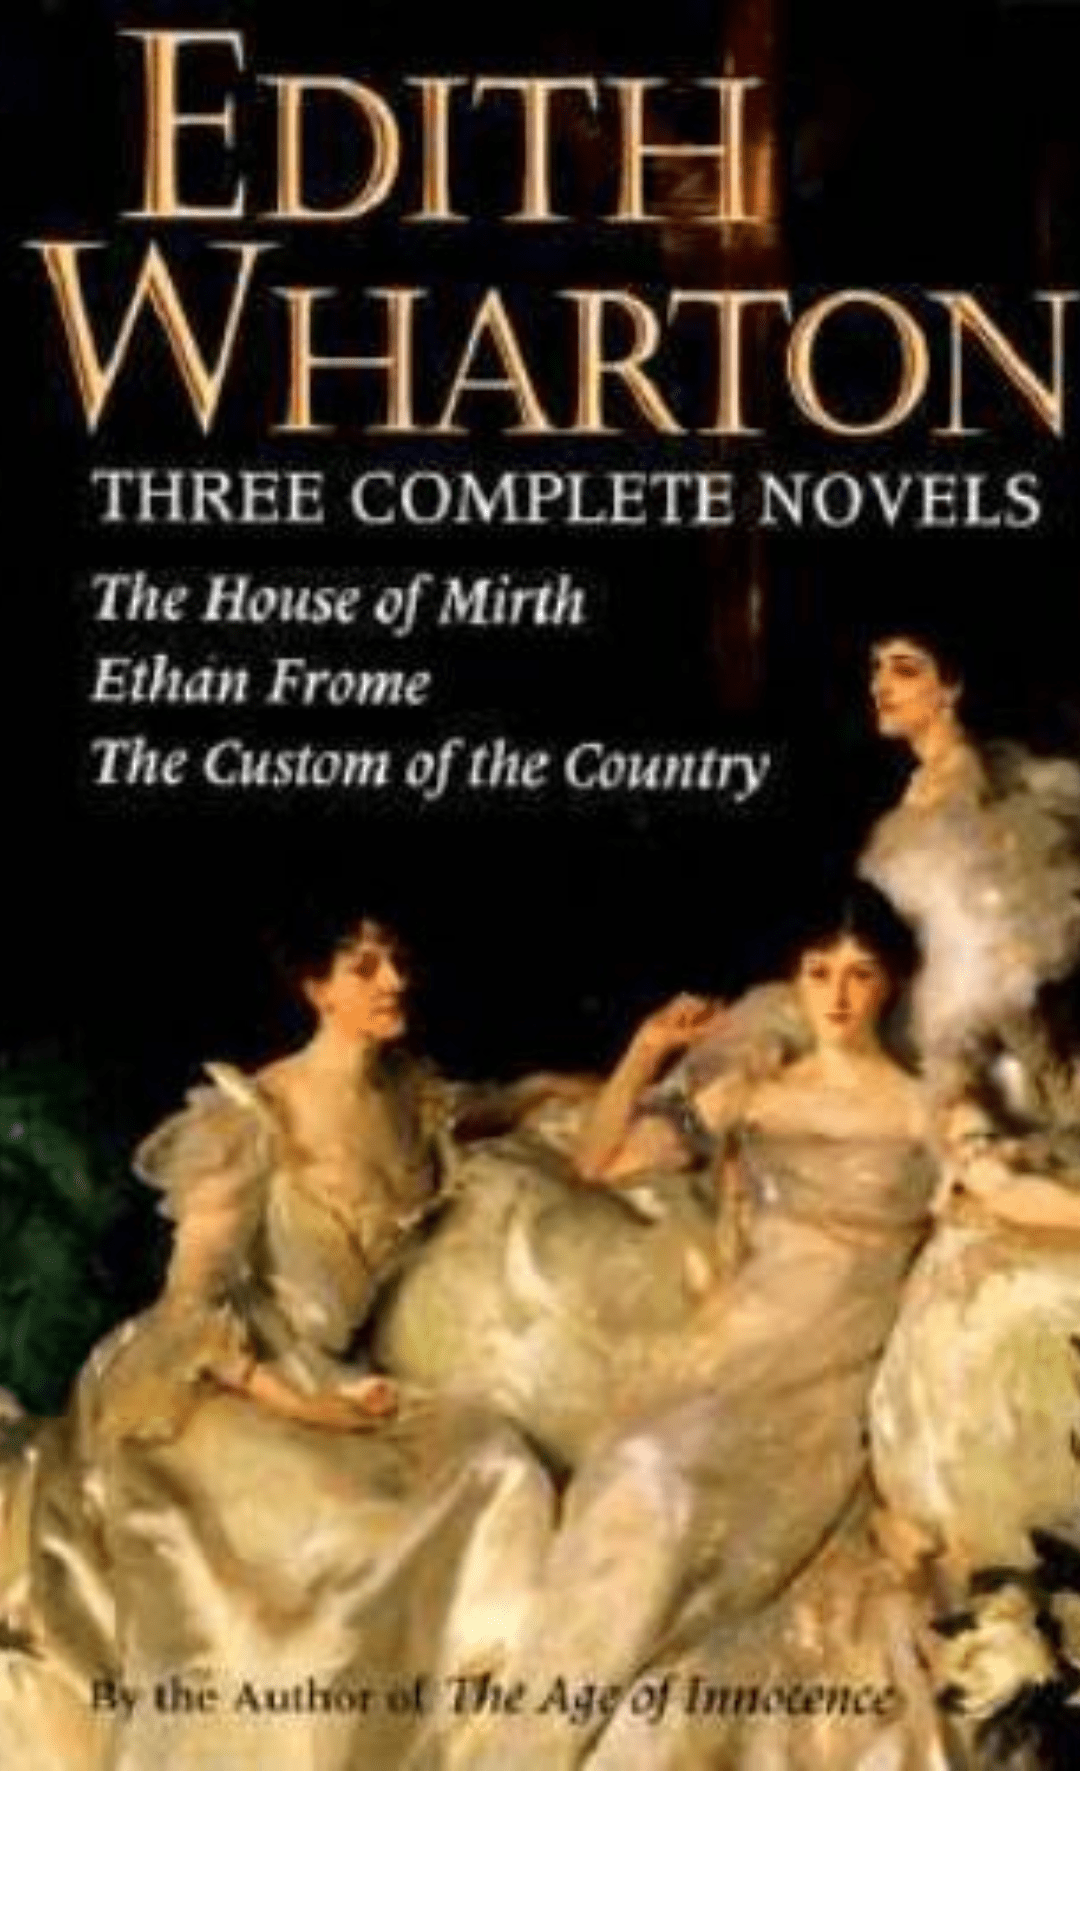 Edith Wharton: Three Complete Novels